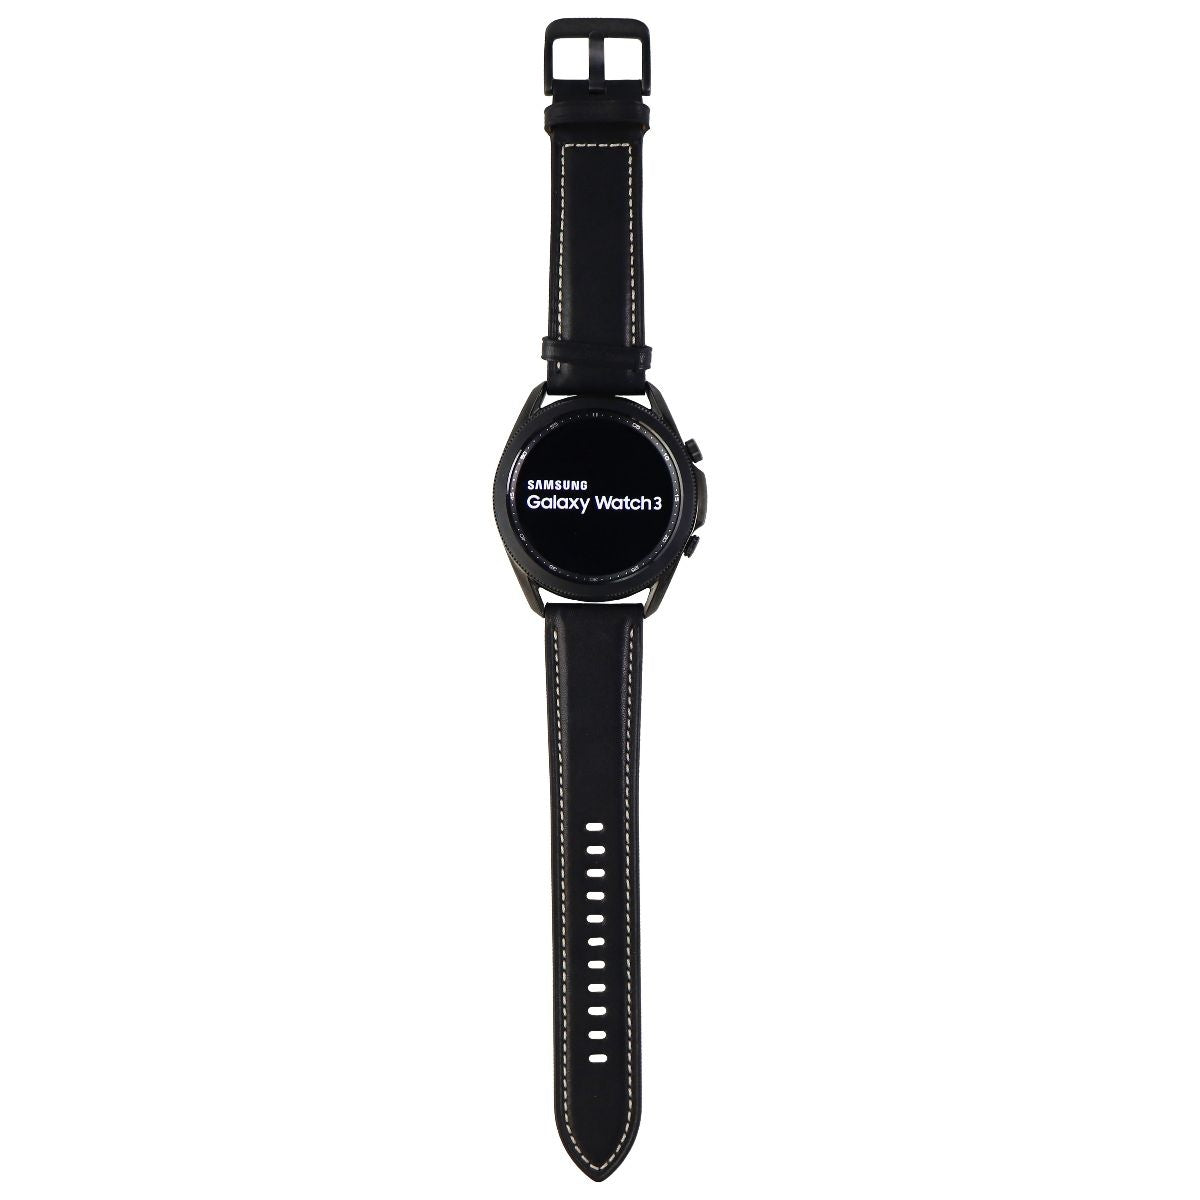 Samsung Galaxy Watch3 (45mm) GPS + Bluetooth Smartwatch - Mystic Black (SM-R840) Smart Watches Samsung    - Simple Cell Bulk Wholesale Pricing - USA Seller